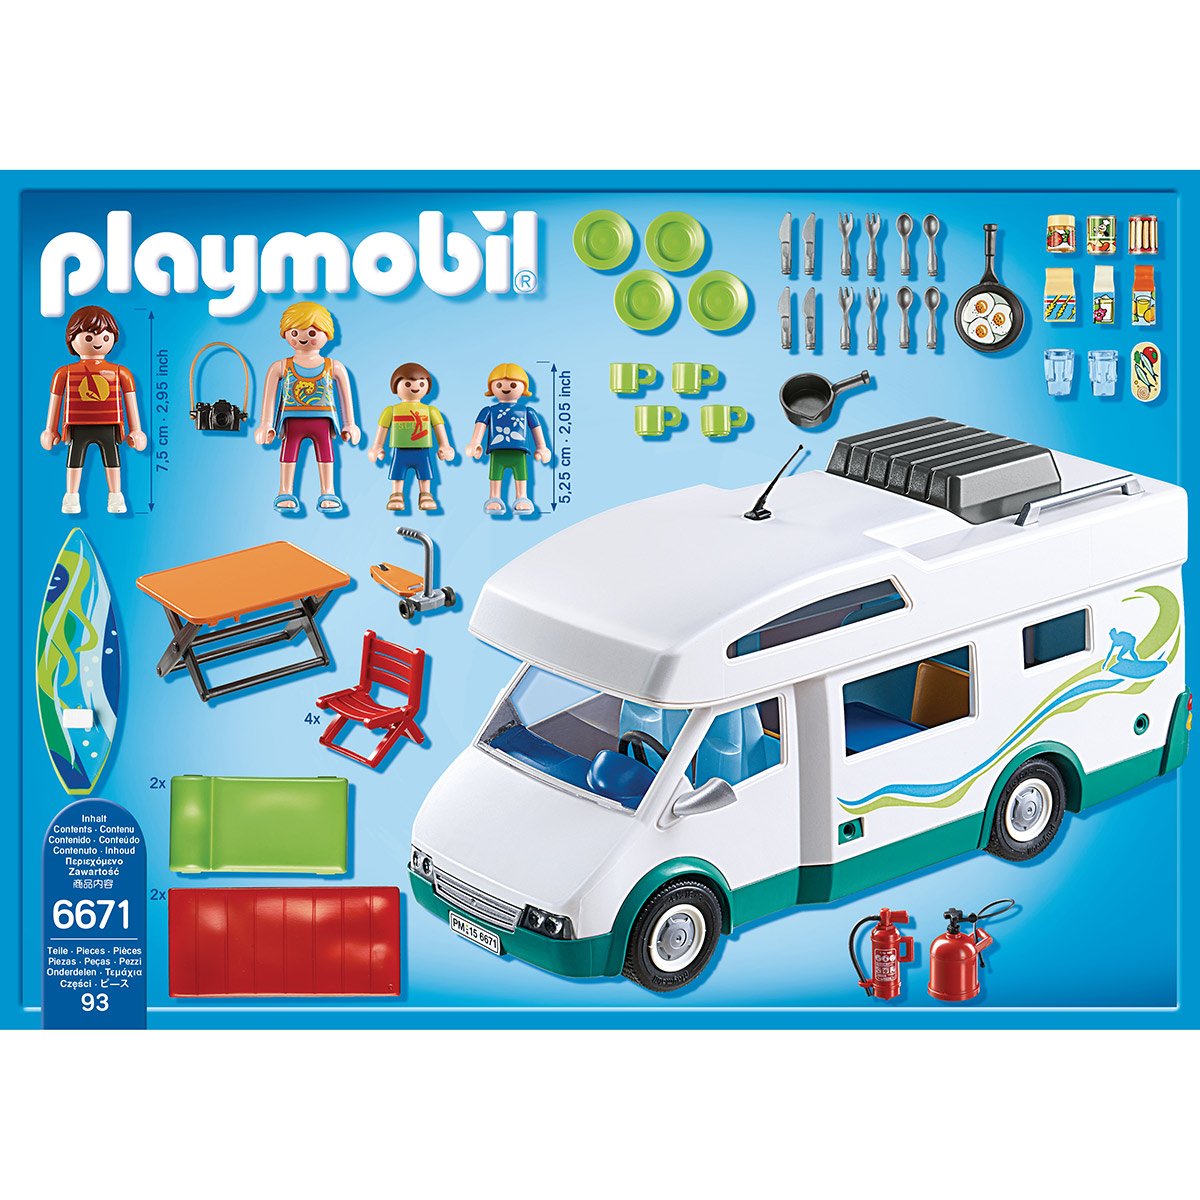 famille camping car playmobil